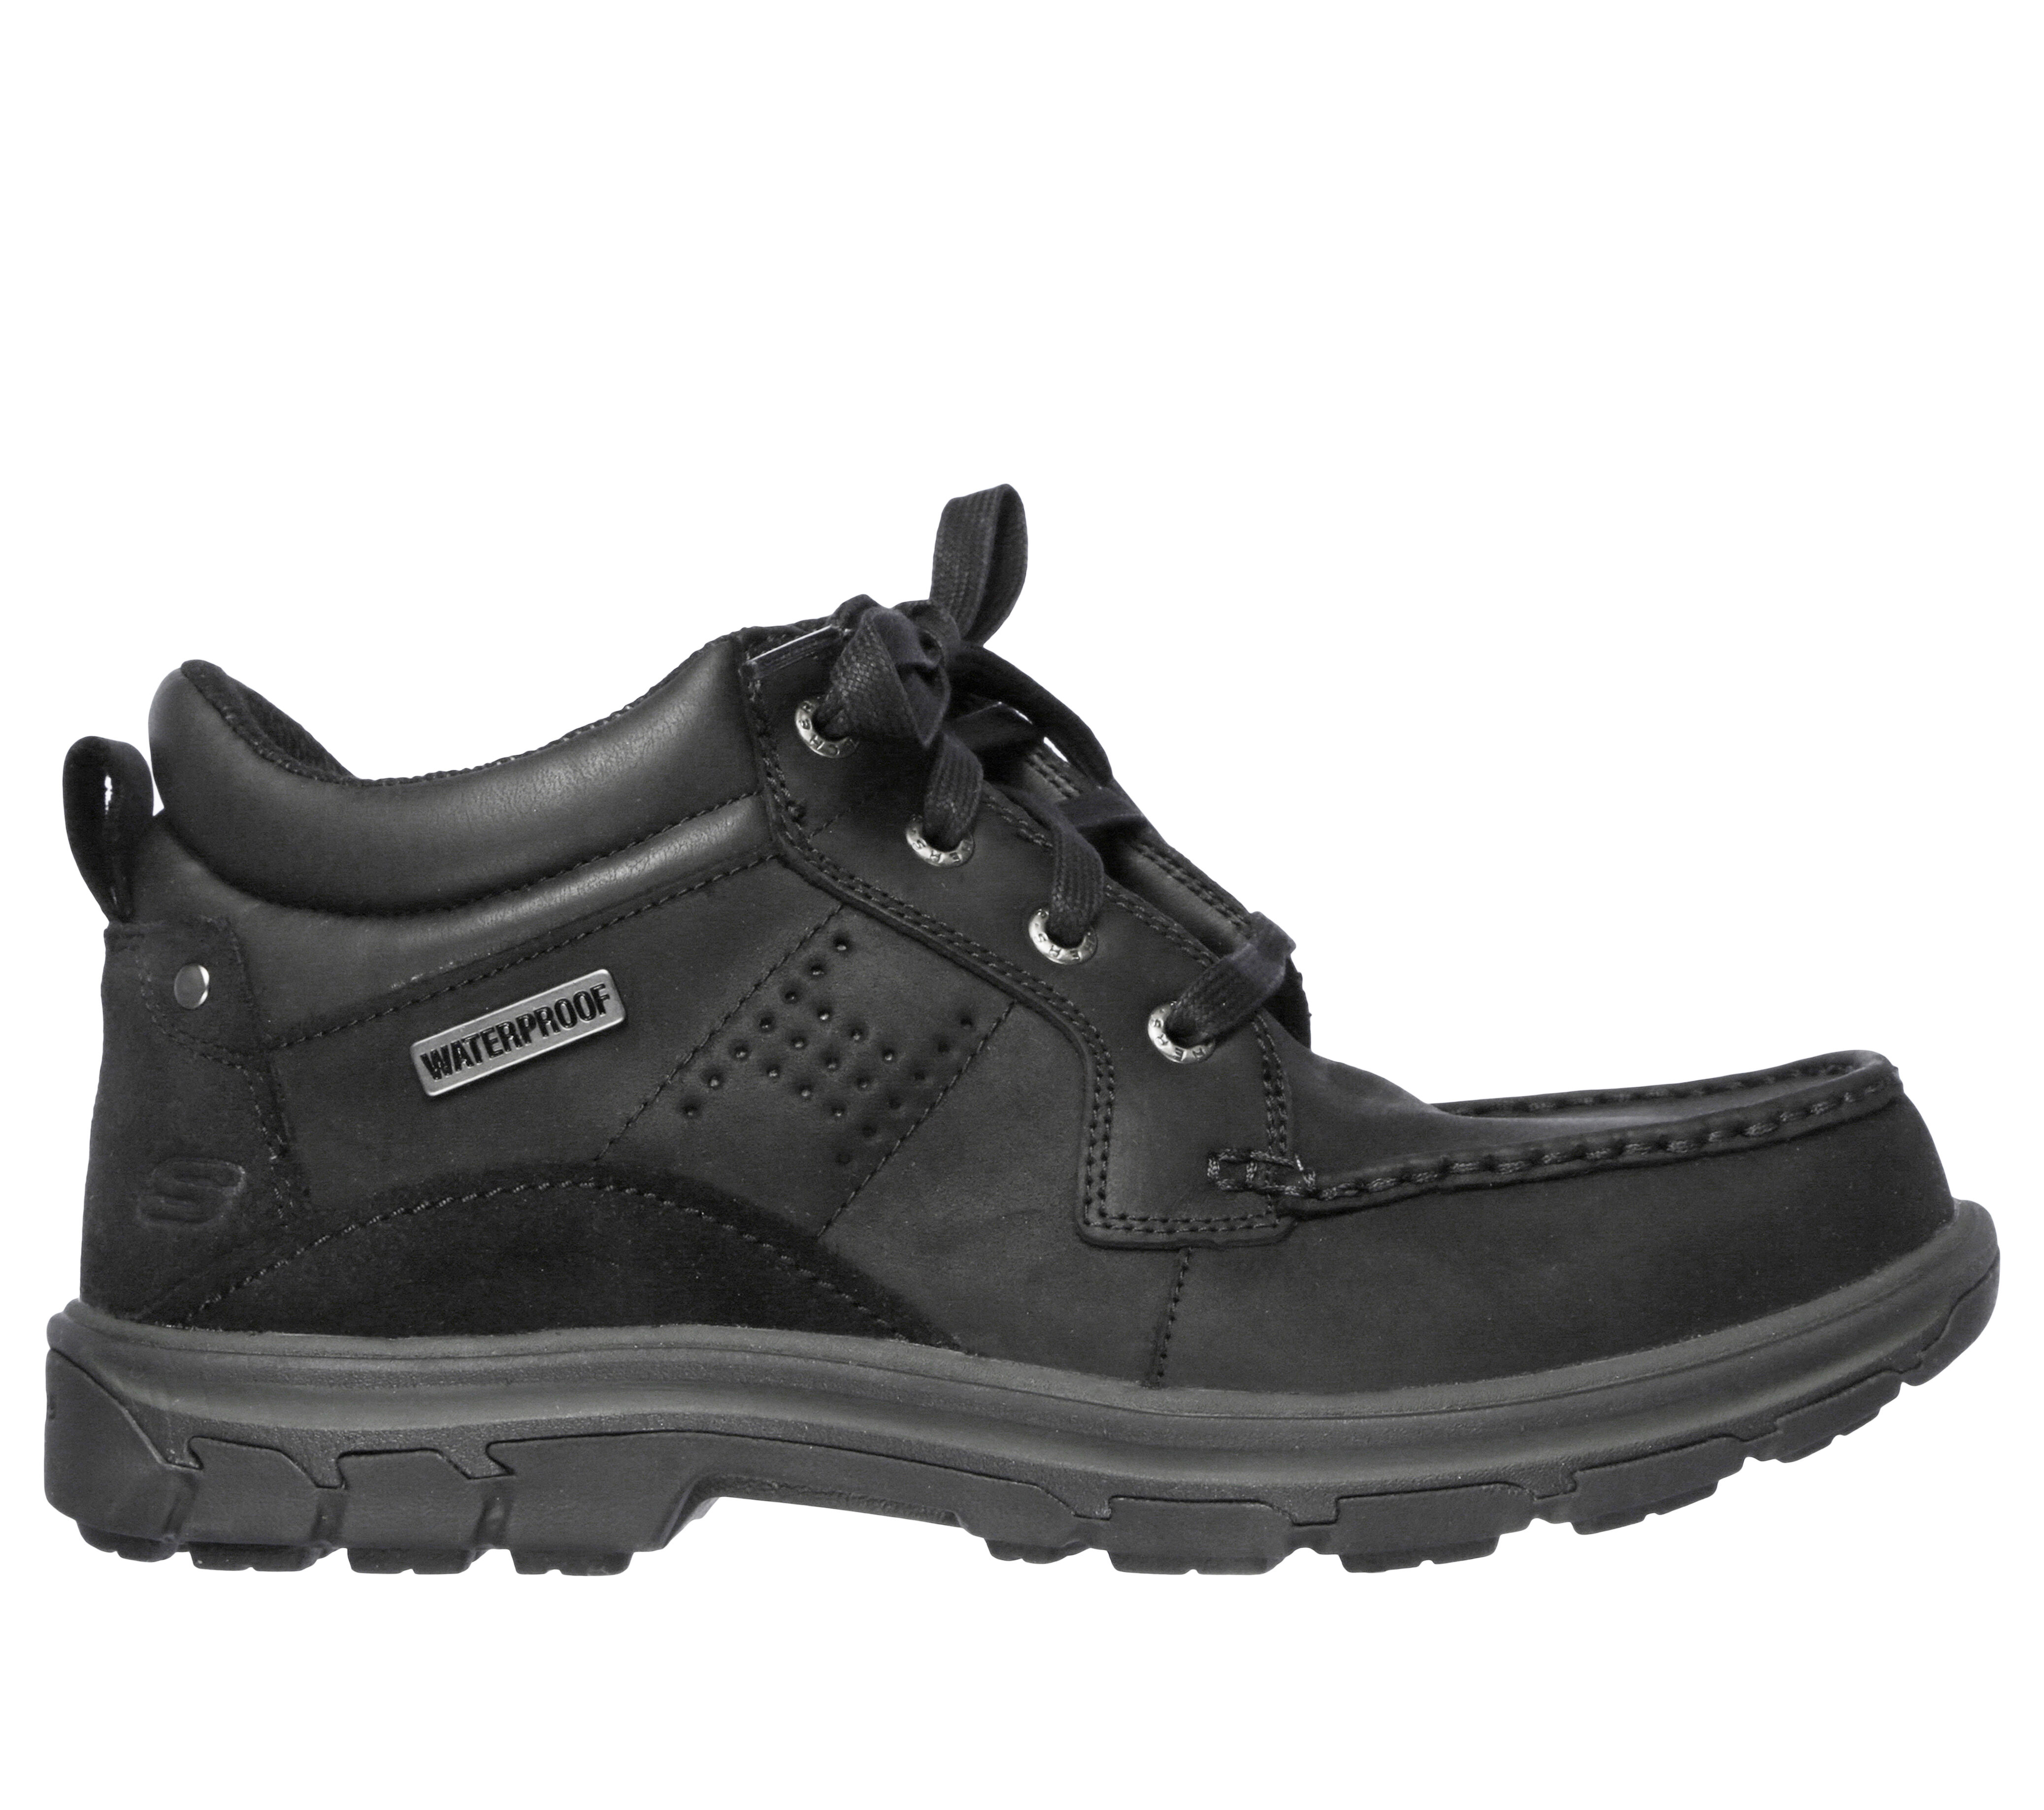 skechers black leather segment melego waterproof boots